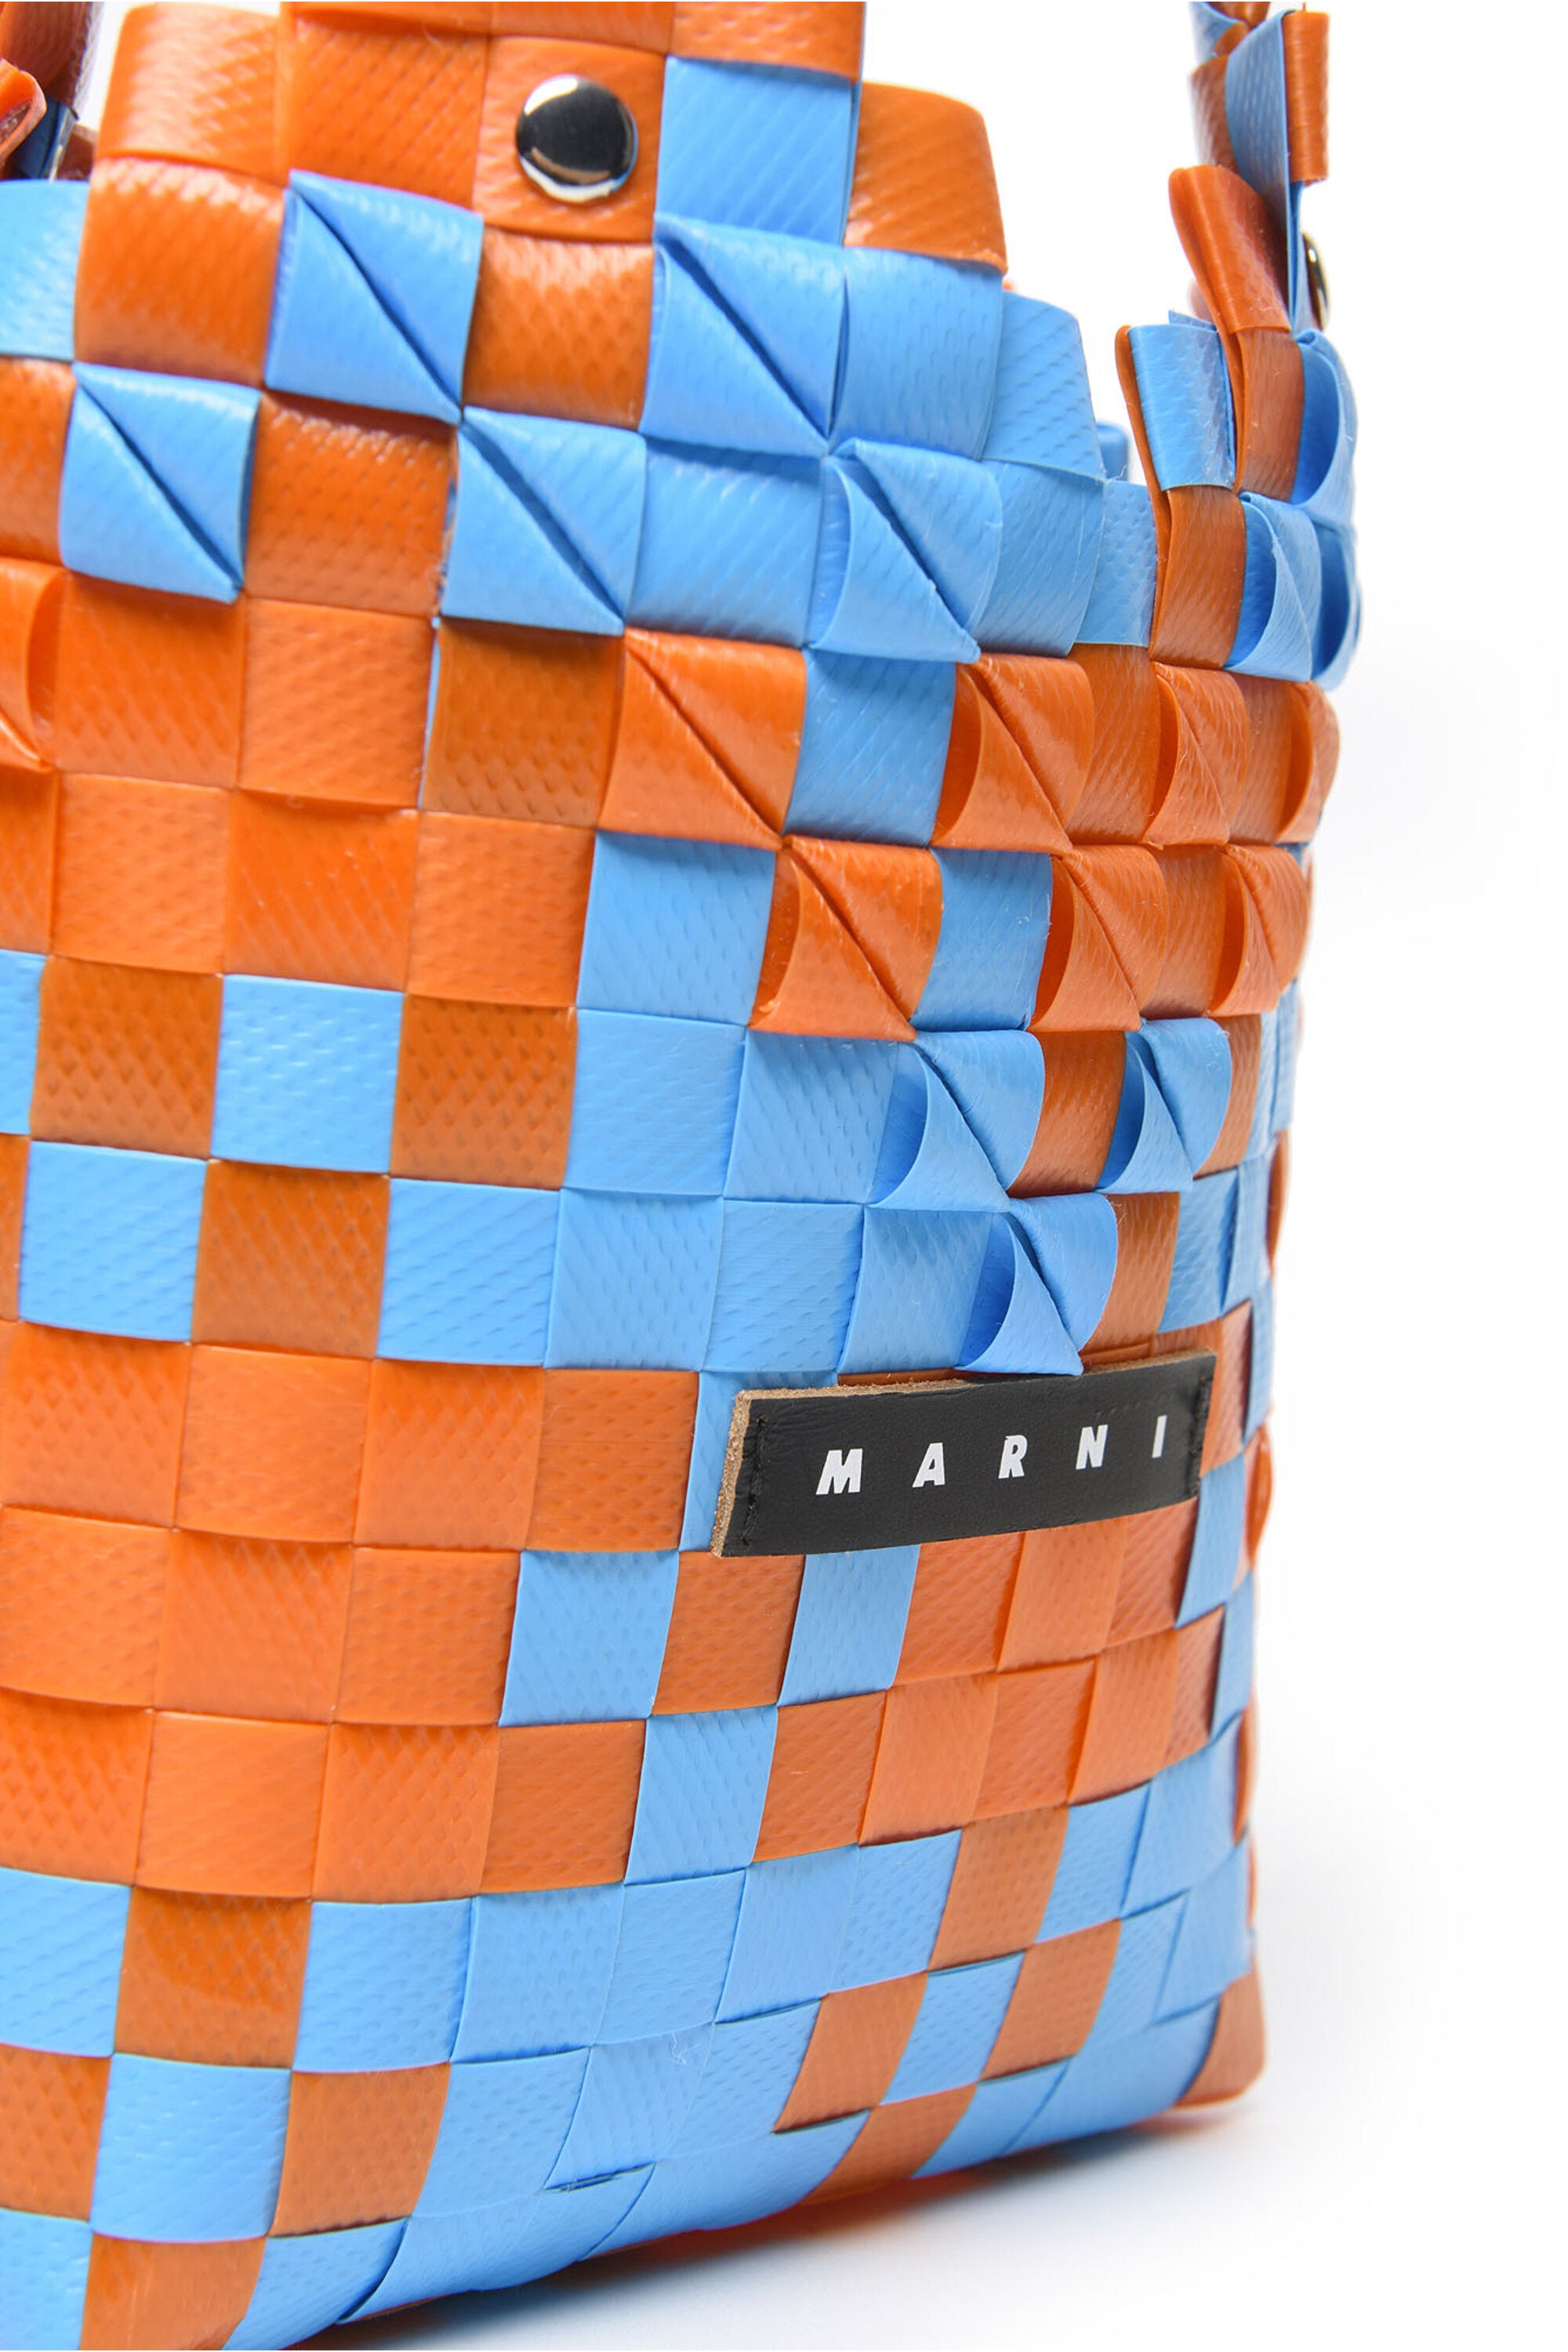 MARNI MARKET 3D BAG in orange cube woven material